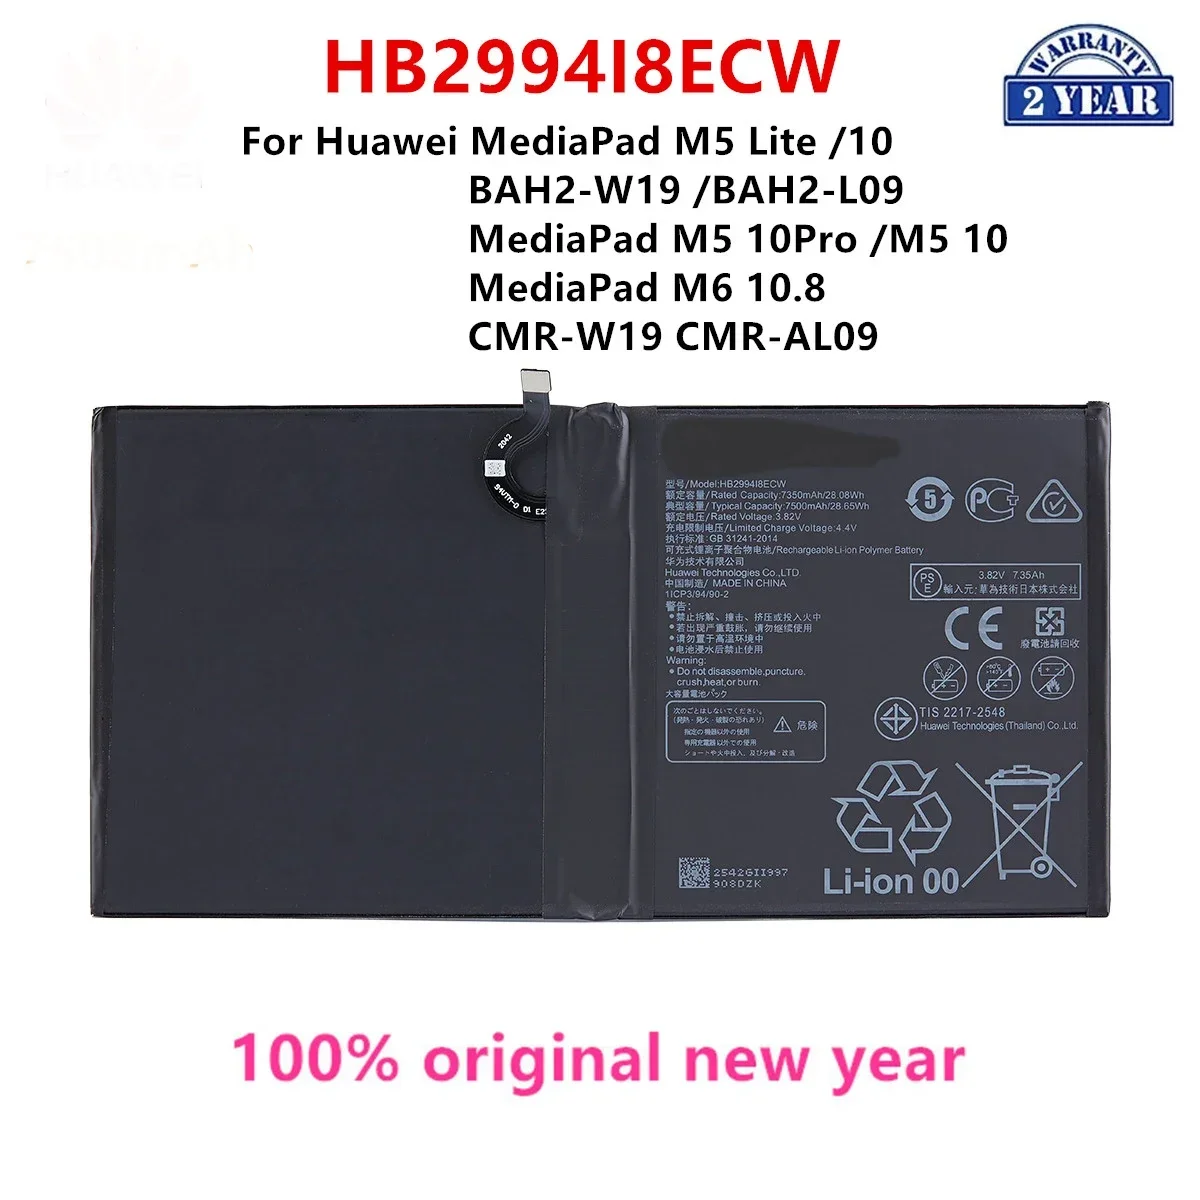 

100% Orginal HB299418ECW 7500mAh Tablet Phone Battery For Huawei MediaPad M6 10.8 M5 LITE M5 10 M5 10pro Replacement Batteries